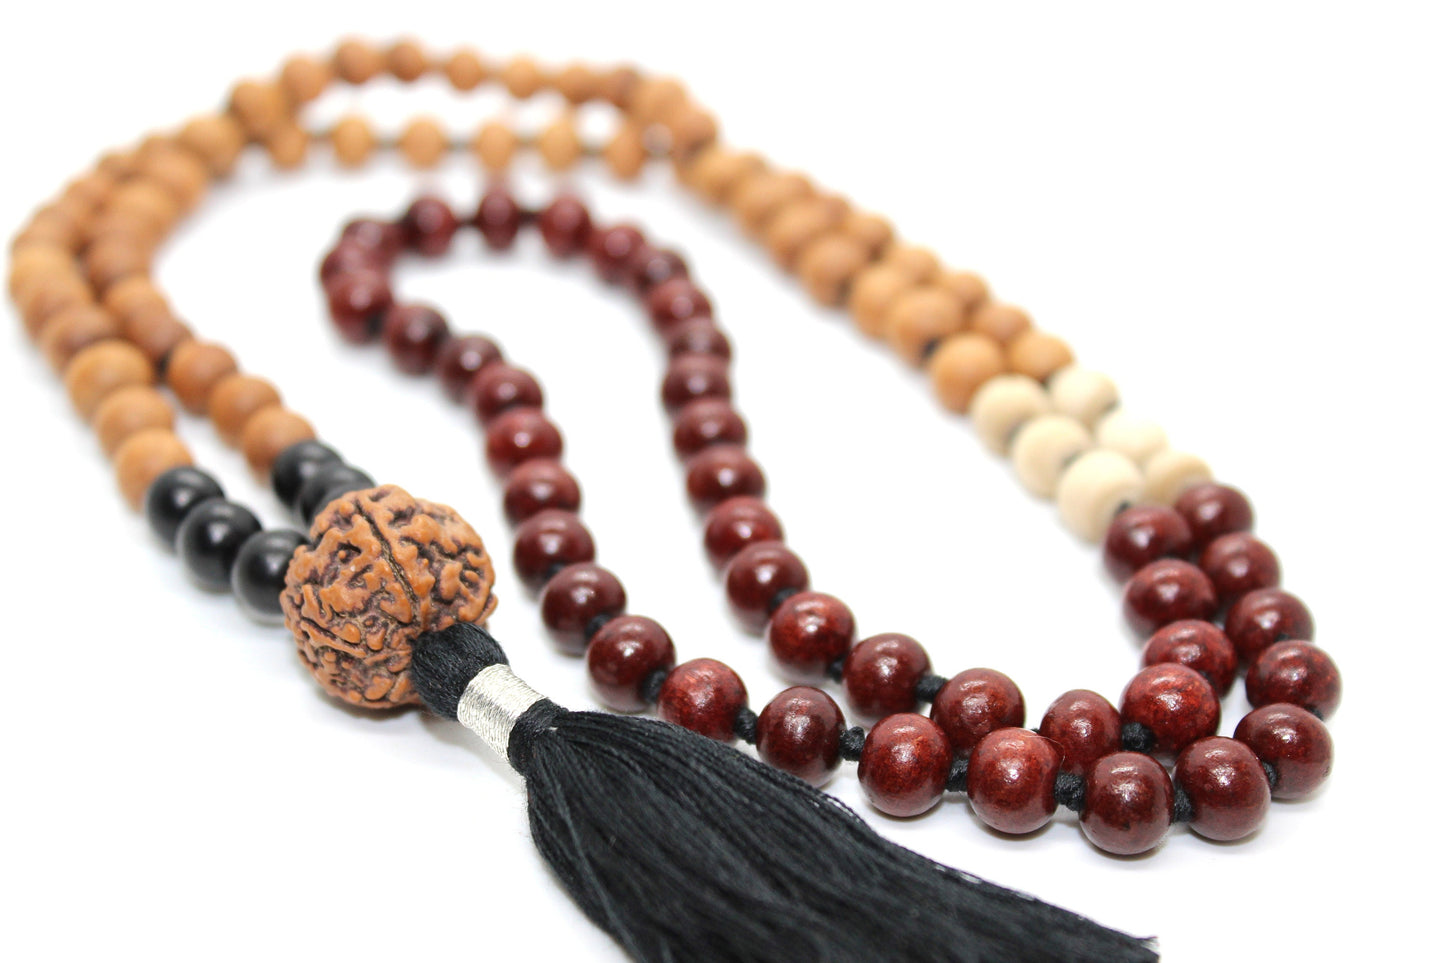 BHAKTI DEVOTION Mala, Combination of Sandalwood beads, Rosewood beads, Tulsi bead, Ebony Wood, Rudraksha Guru bead, 108 beads mala necklace